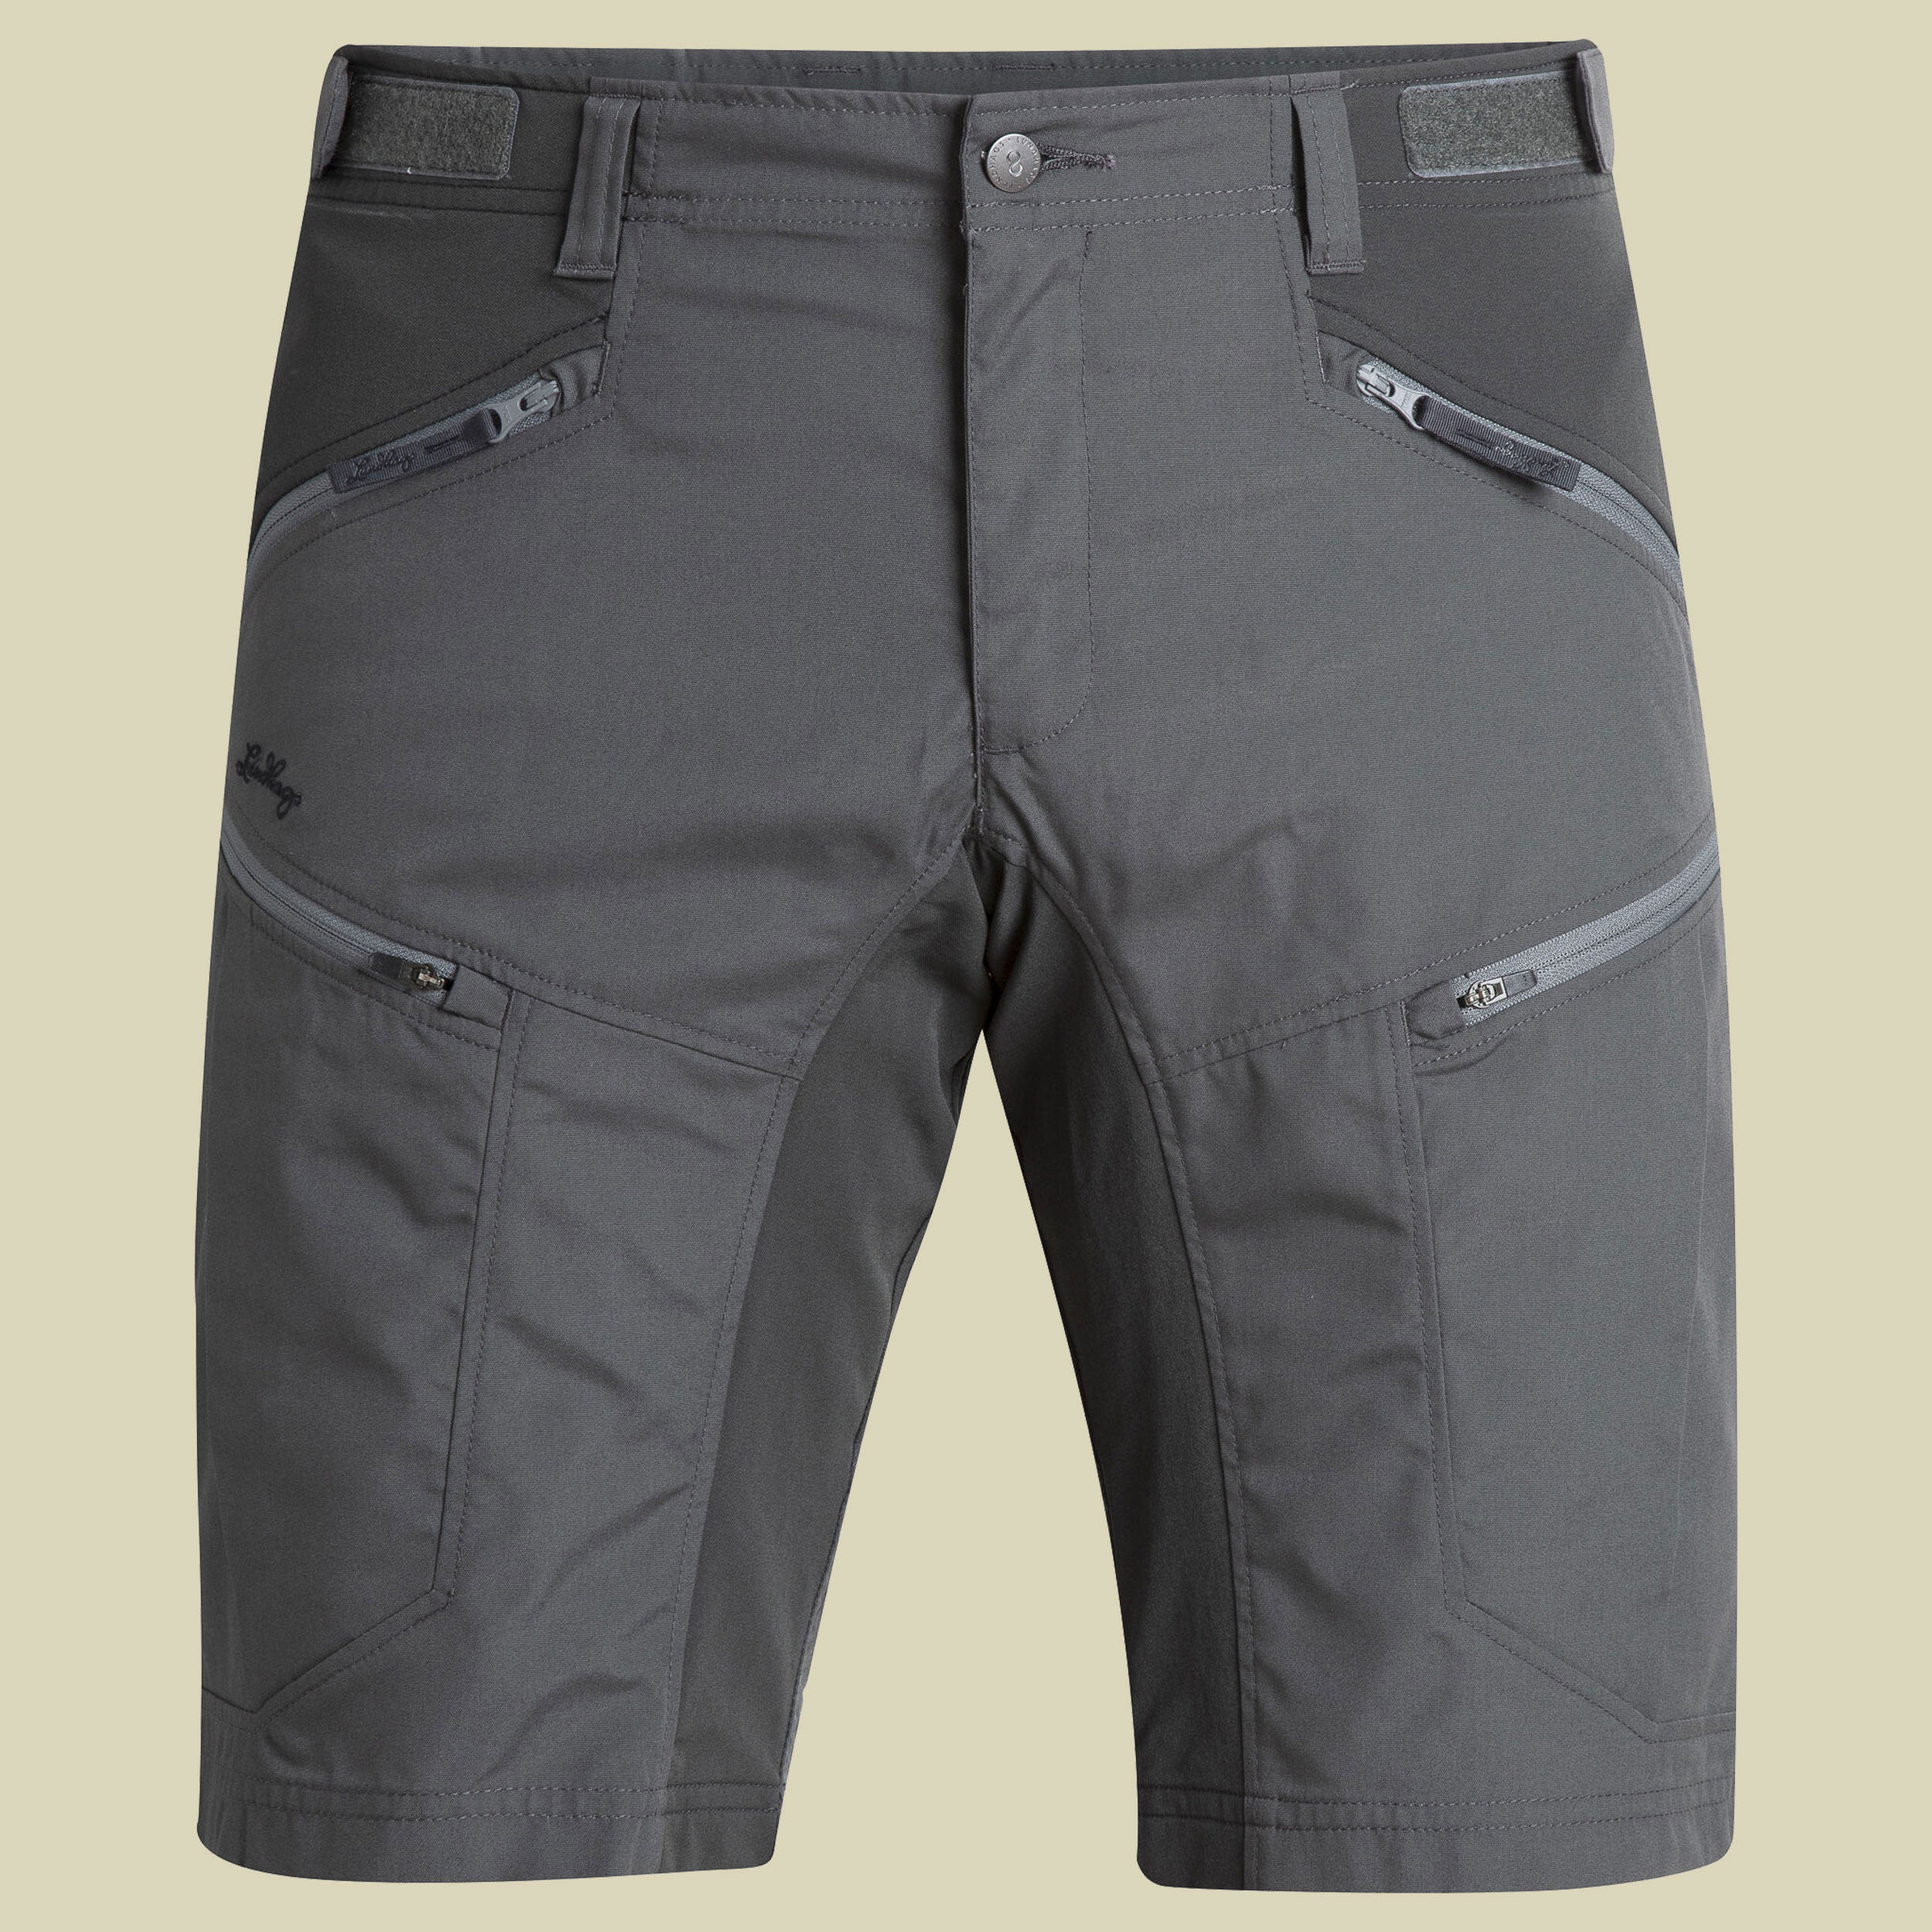 Makke II Shorts Men Größe 56 Farbe granite/charcoal